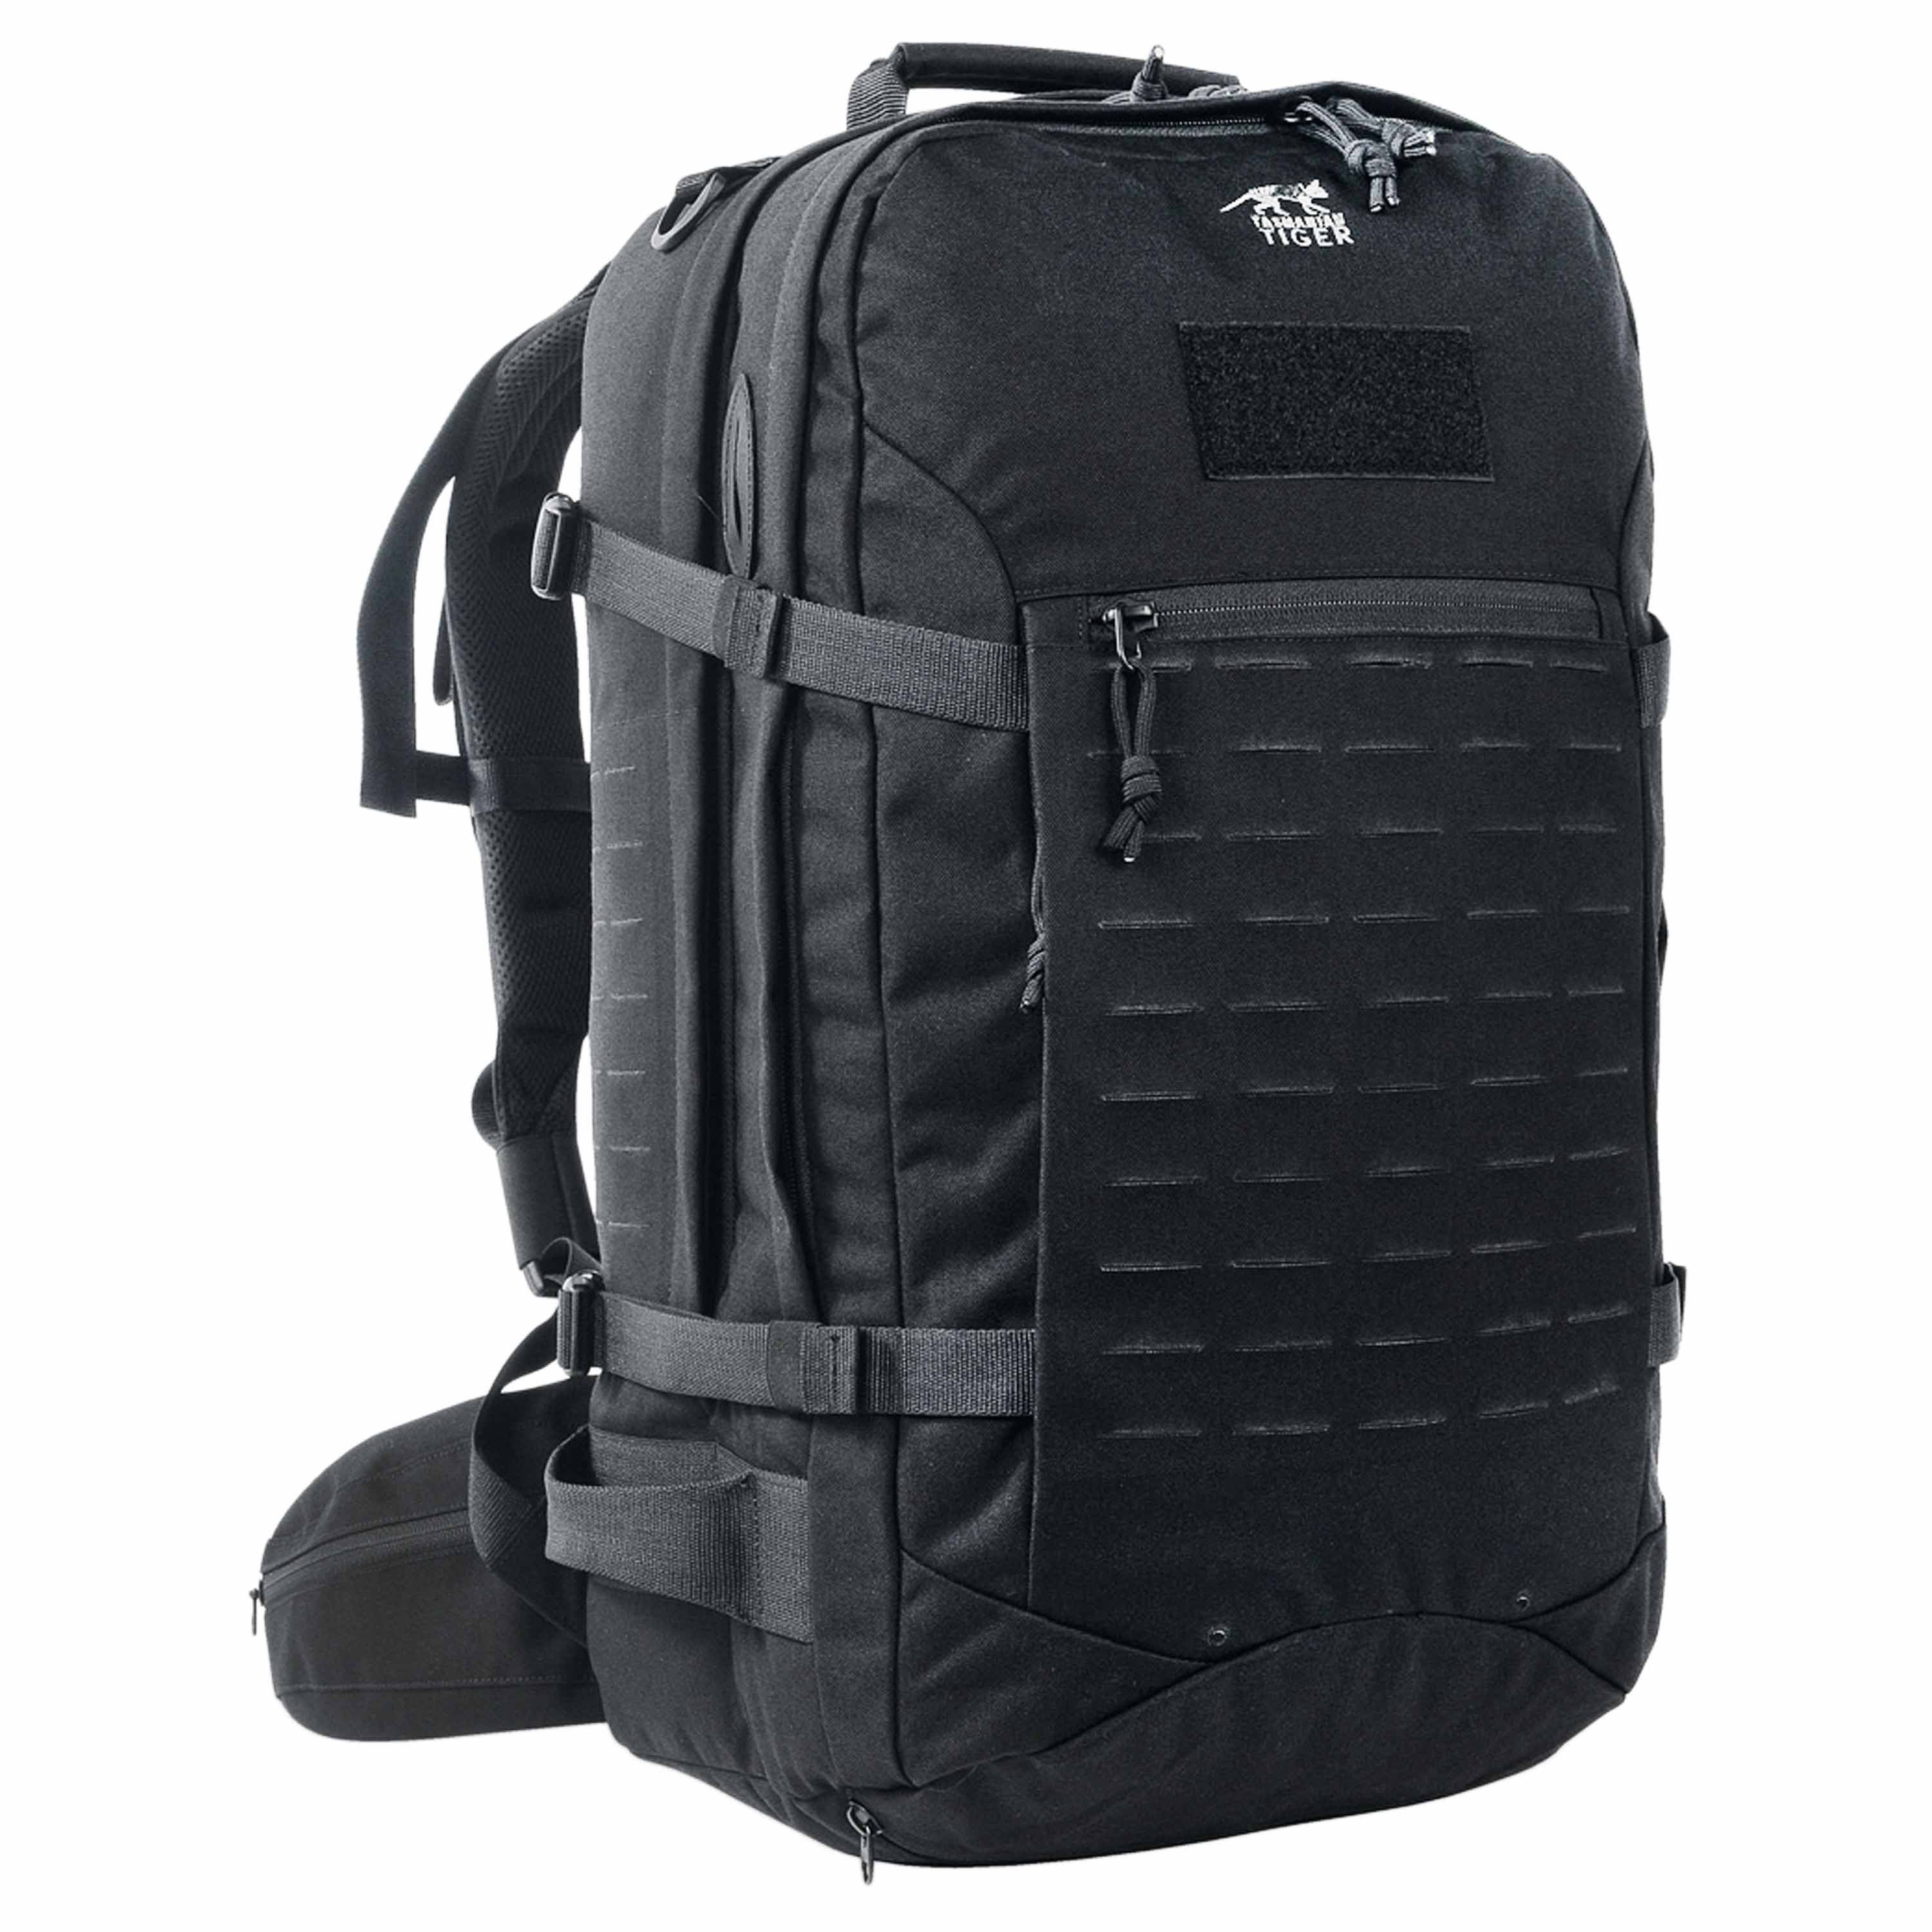 Purchase the Tasmanian Tiger Backpack Mission Pack MK II black b